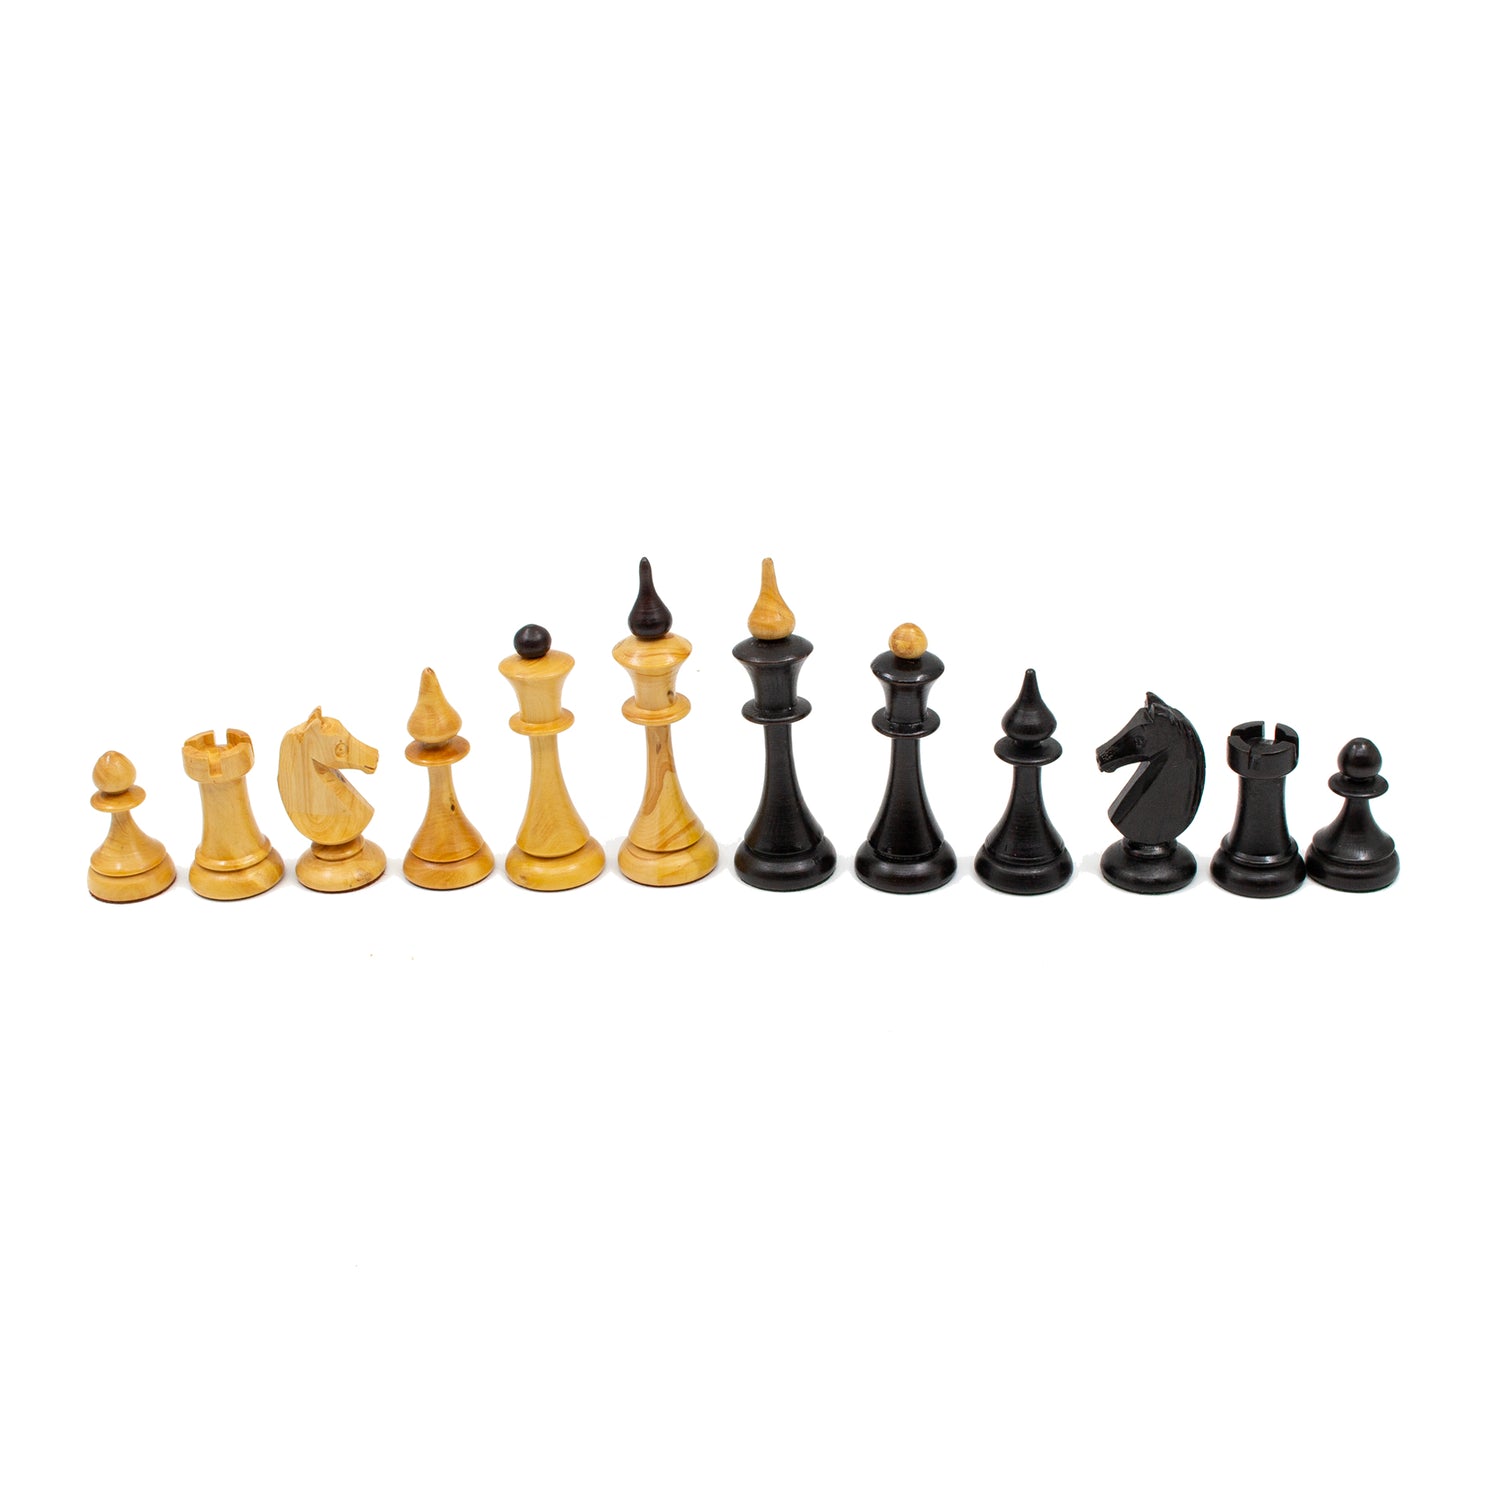 Unique Latvian Chess Set: Hand-Carved Walnut - Ketohandcraft